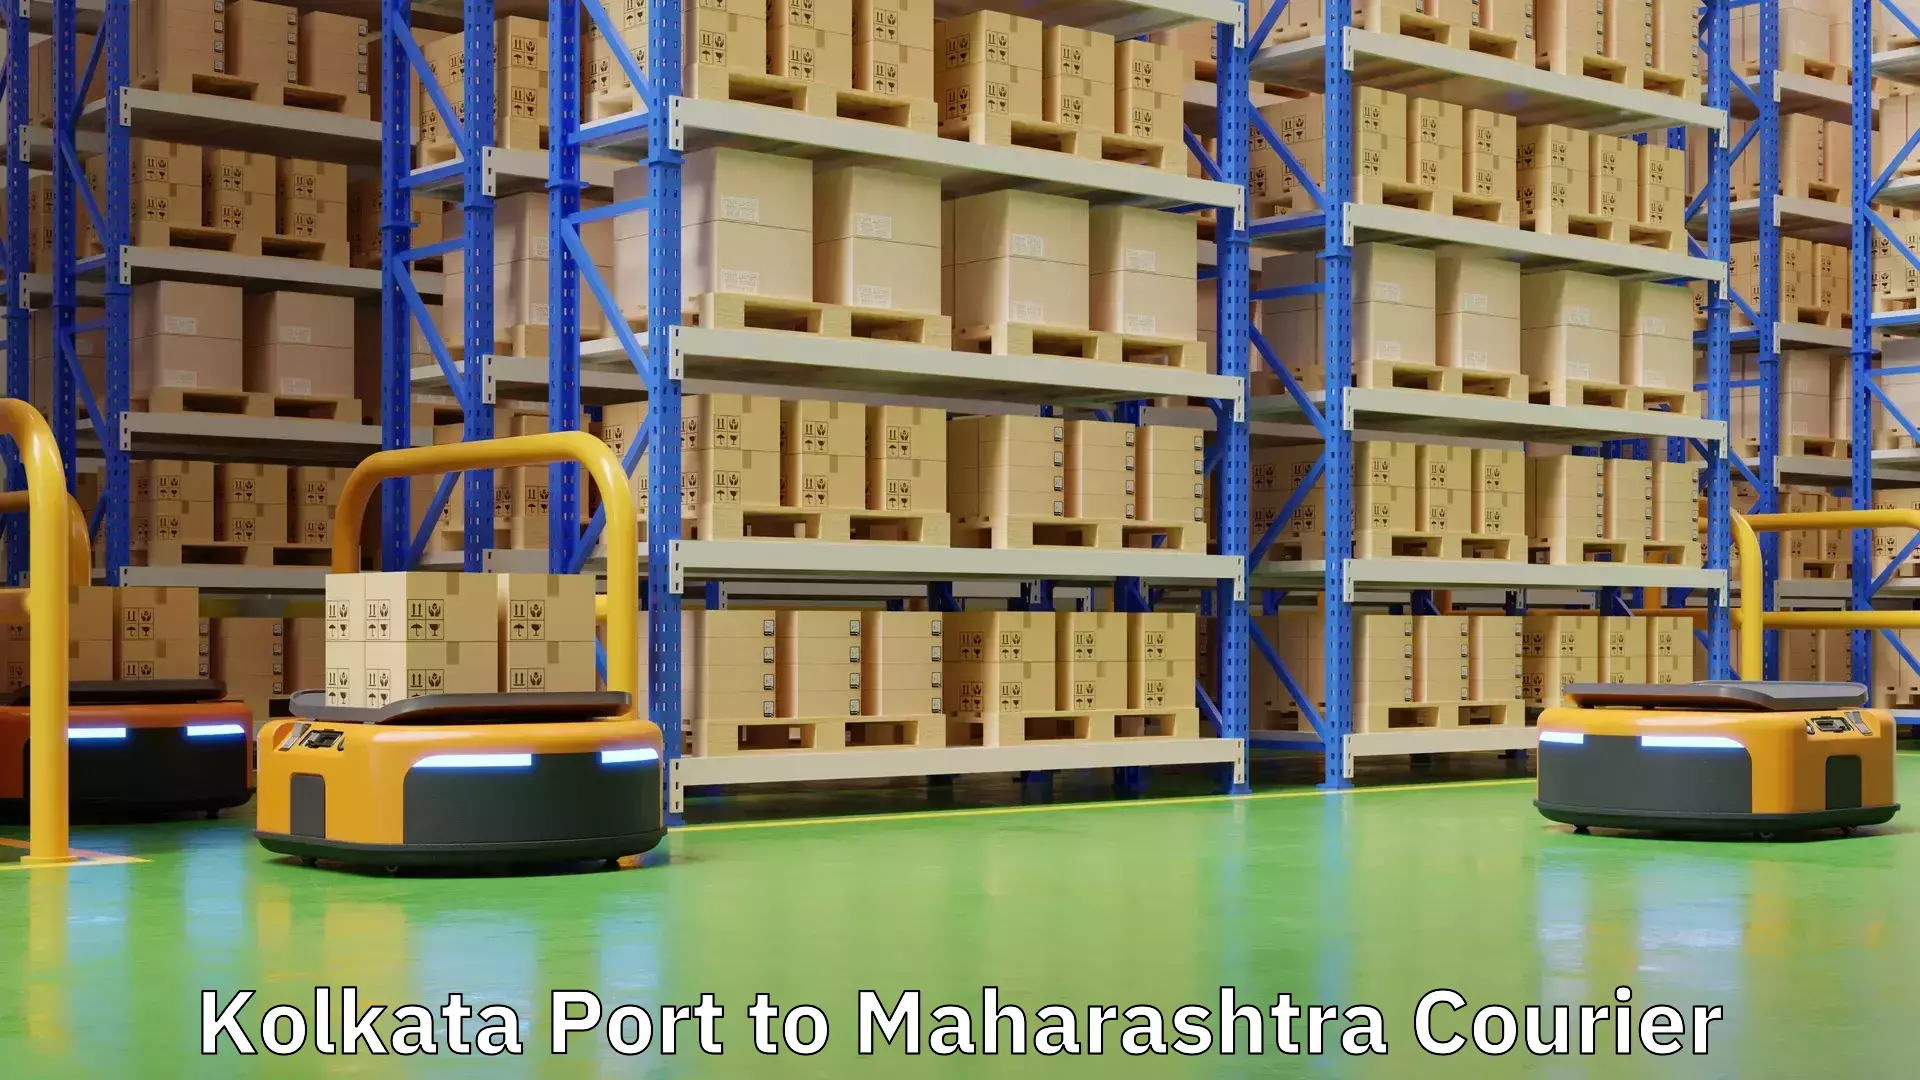 Nationwide parcel services Kolkata Port to Maharashtra